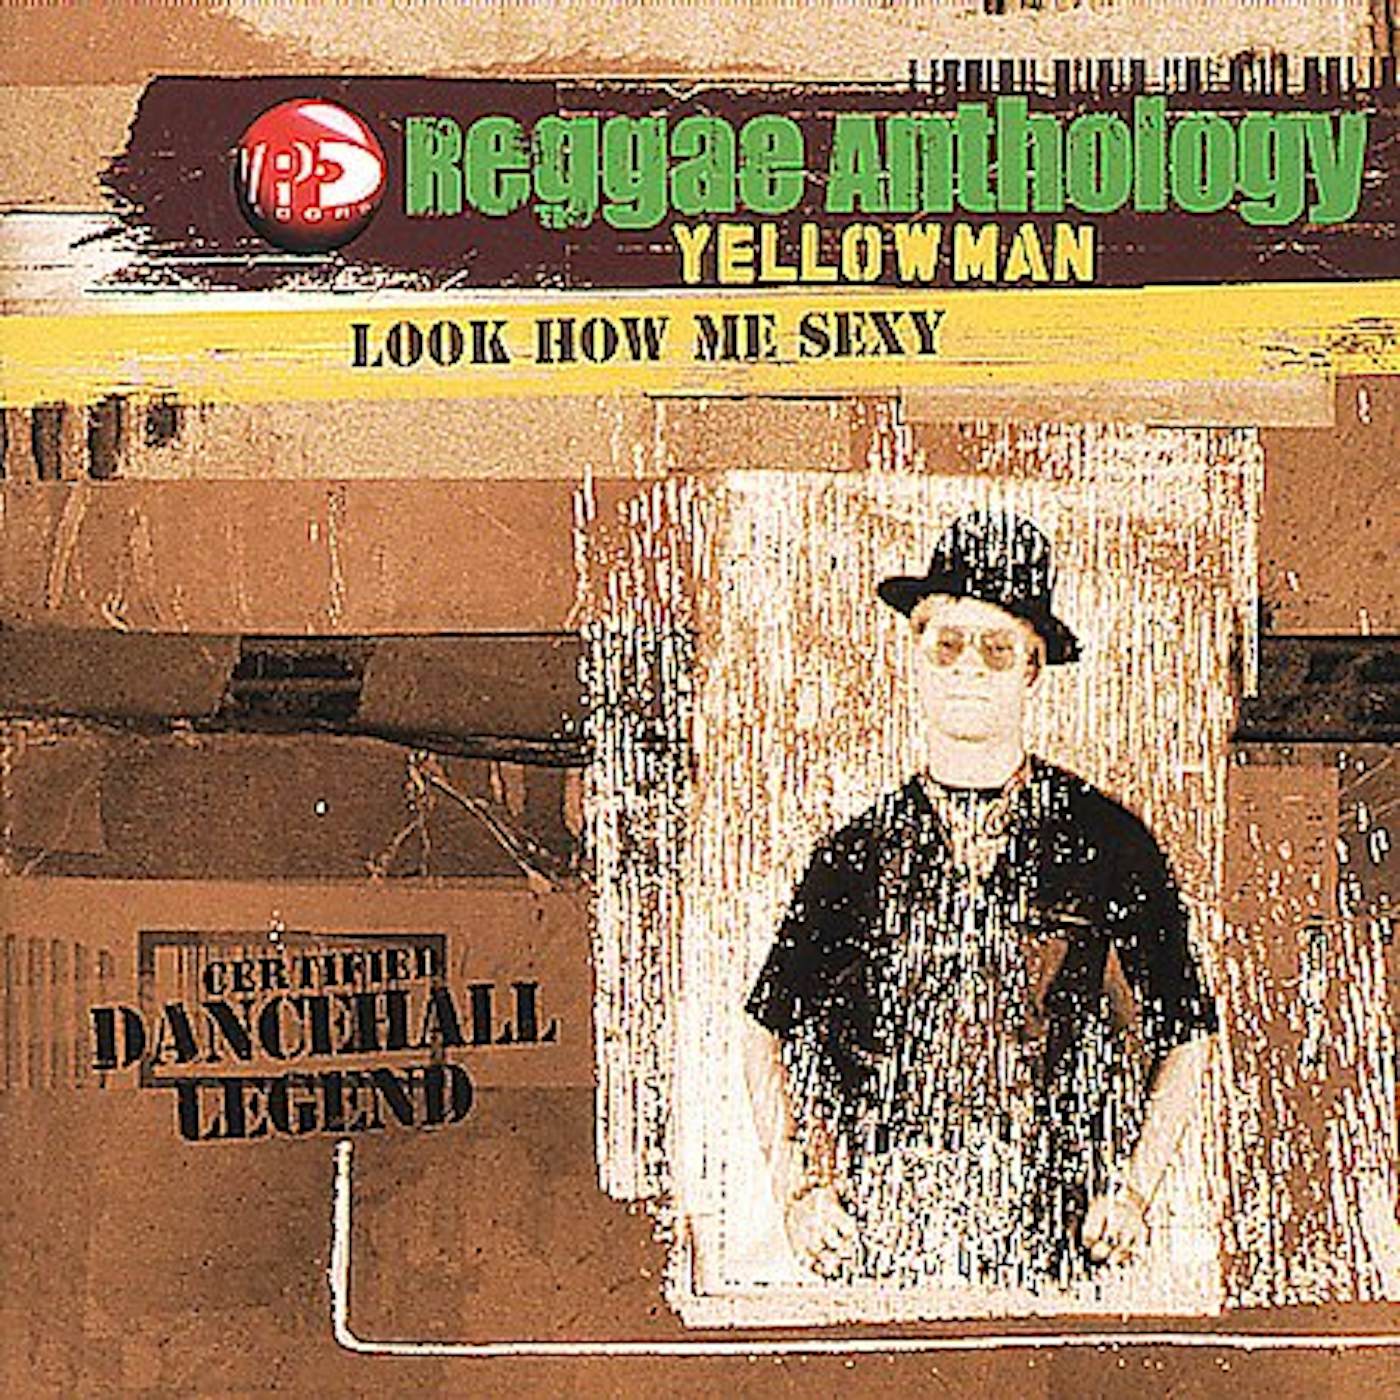 Yellowman REGGAE ANTHOLOGY: LOOK HOW ME SEXY Vinyl Record